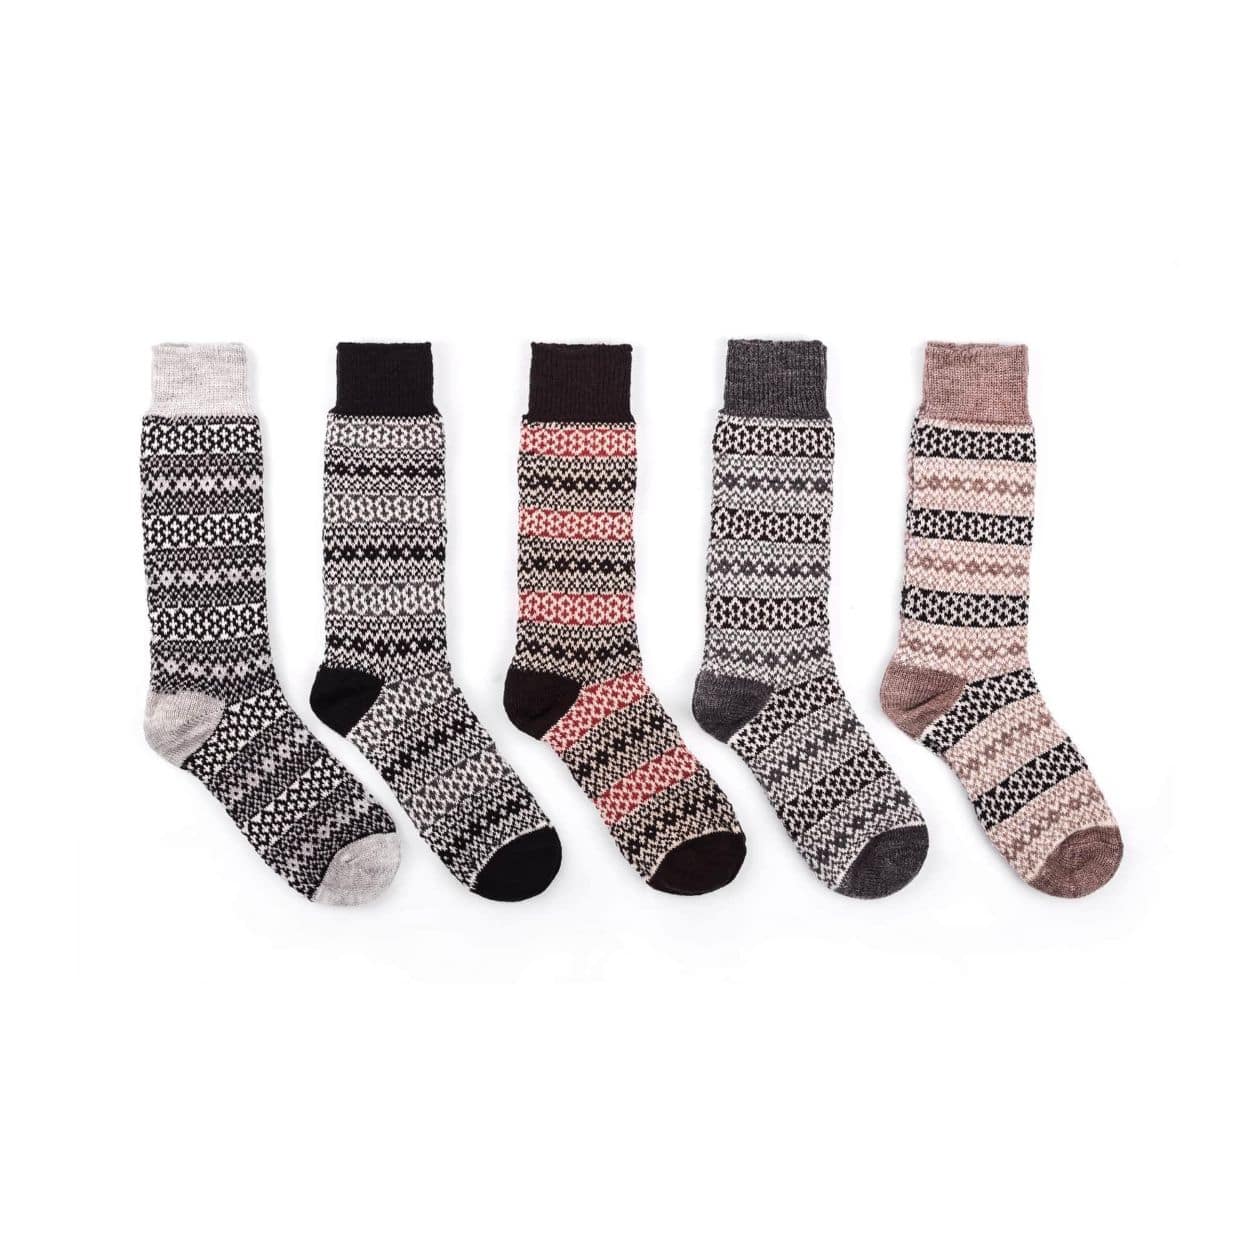 Nordic Socks Merino Wool 5 Pairs PERFORM™ Warm (Jorunn) - Unisex